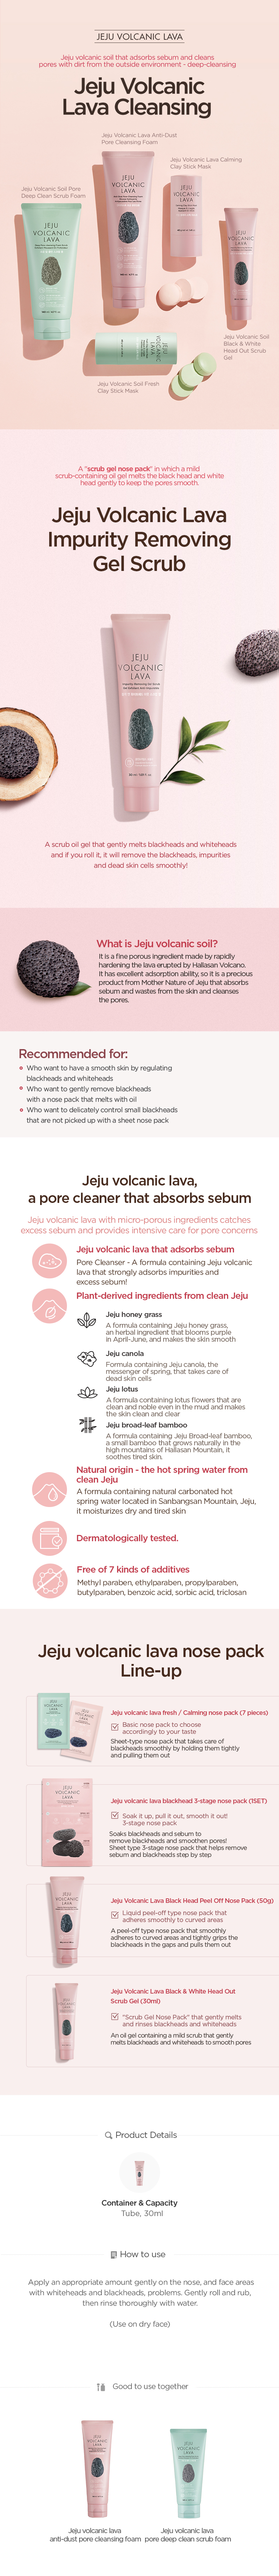 Jeju Volcanic Lava Impurity Removing Gel Scrub